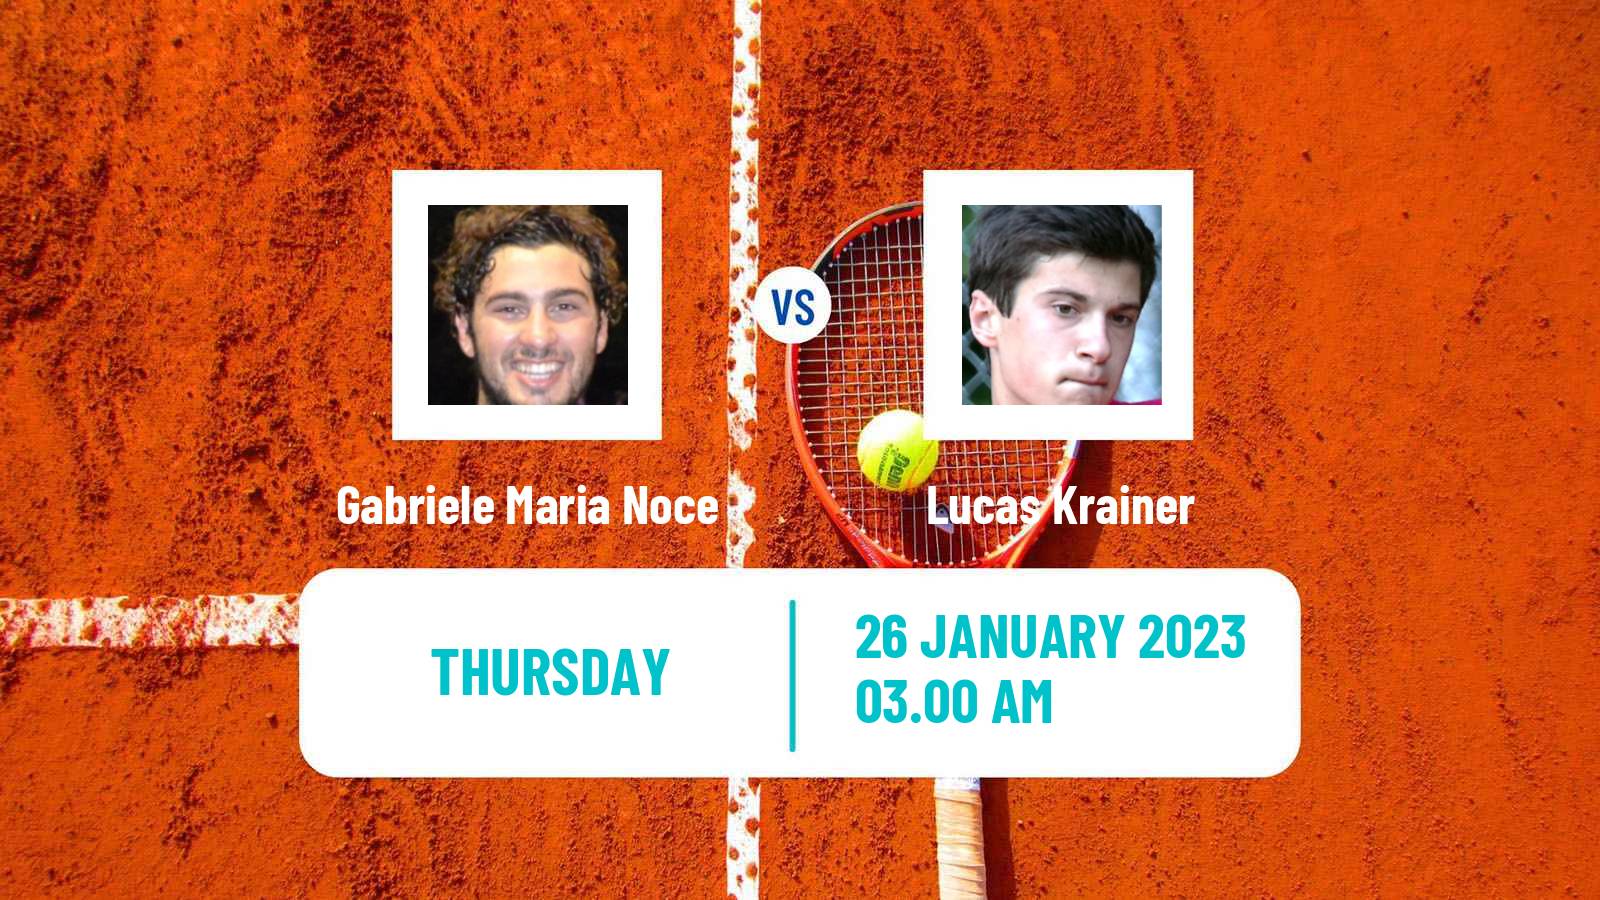 Tennis ITF Tournaments Gabriele Maria Noce - Lucas Krainer